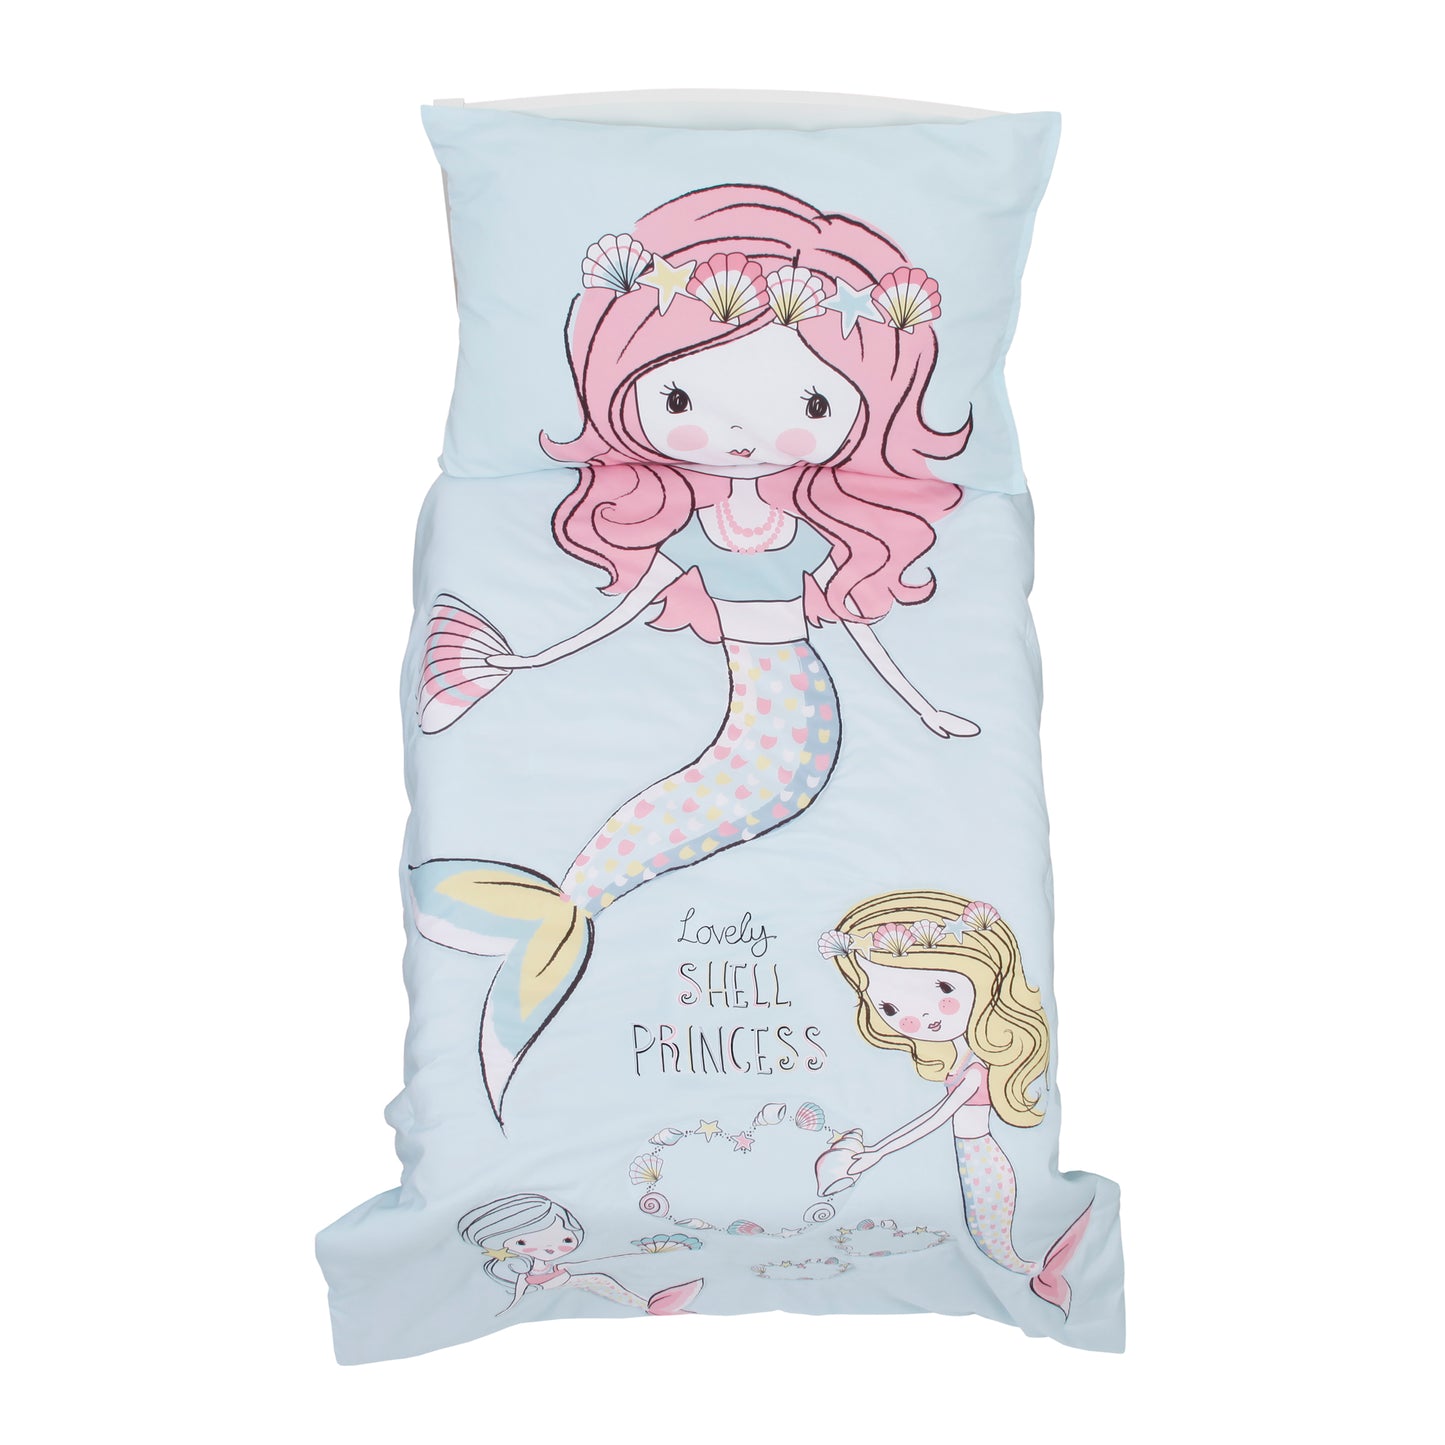 Everything Kids Mermaid Aqua, Pink, Yellow 4 Piece Toddler Bed Set - Comforter, Fitted Bottom Sheet, Flat Top Sheet, Standard Size Pillowcase